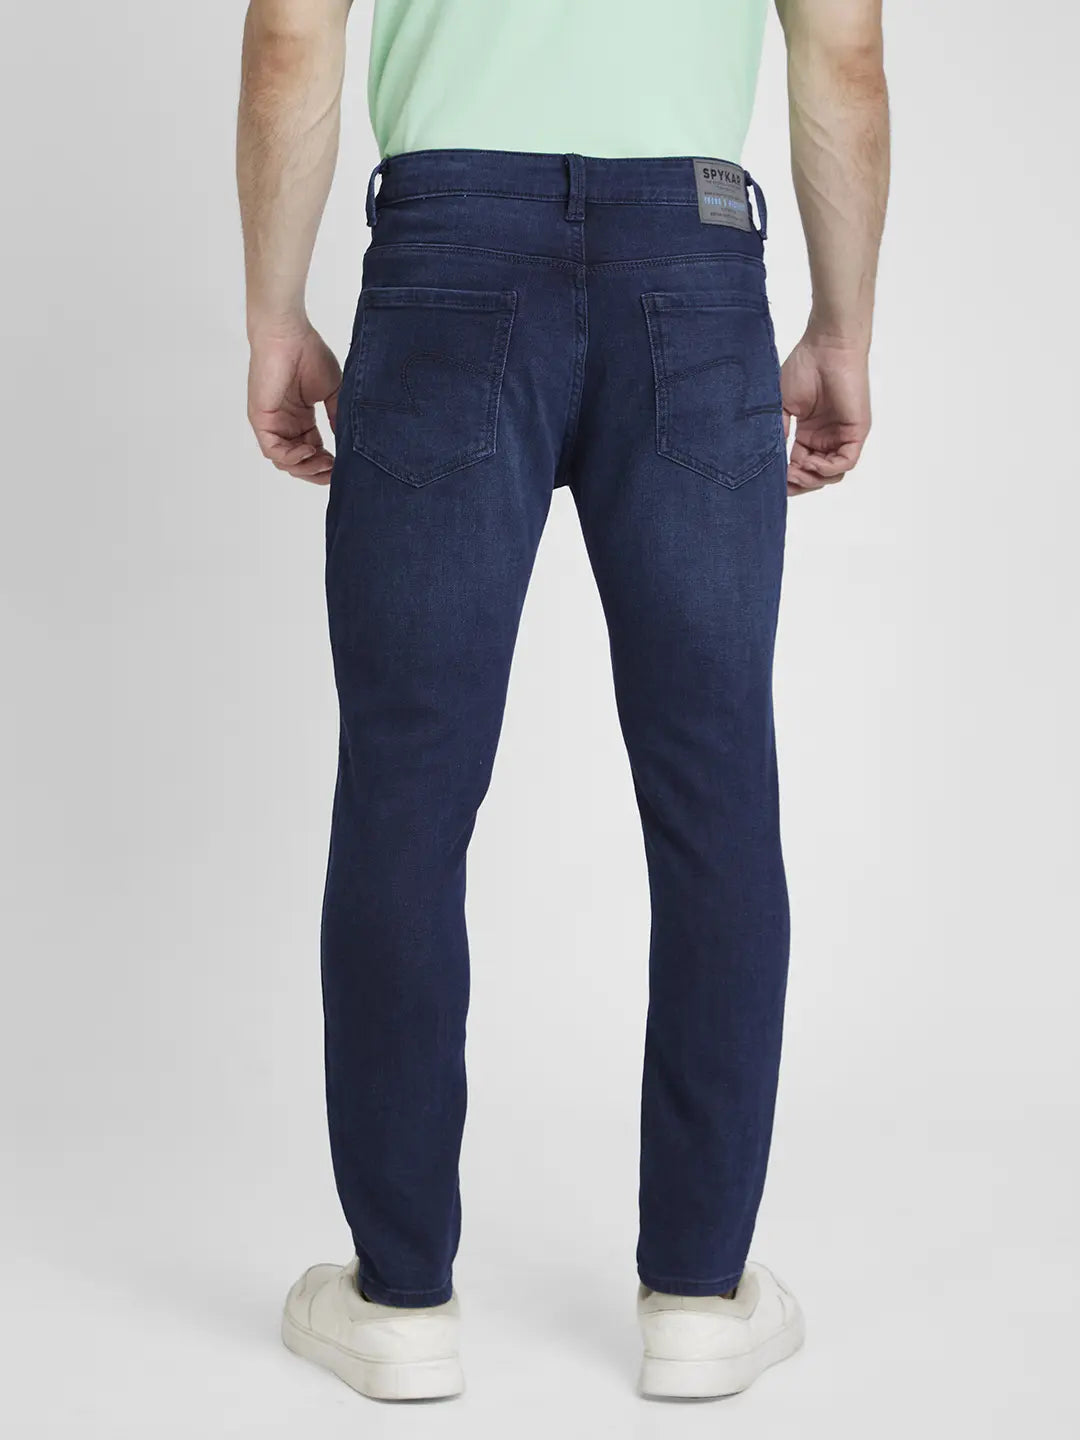 Men's Jeans Slim Fit with Suspenders Navy Blue Bolf KS2056